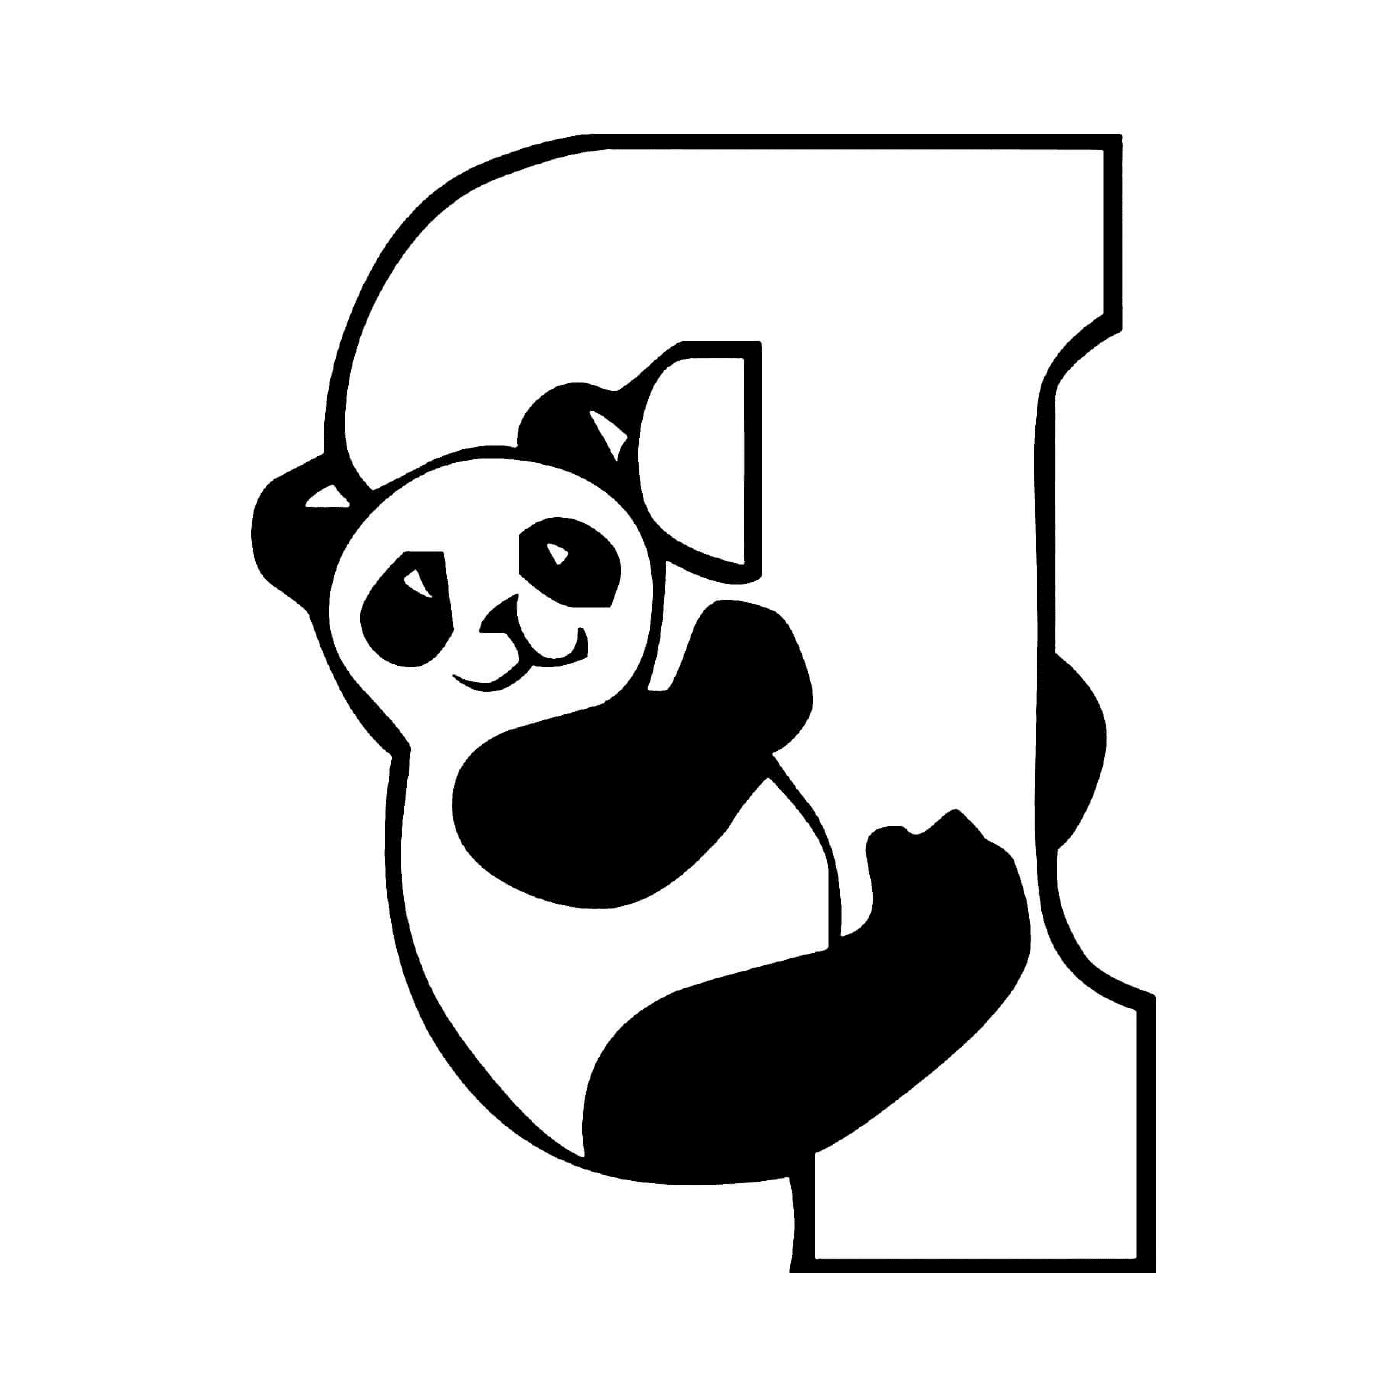  Carta P para panda, alfabeto infantil 